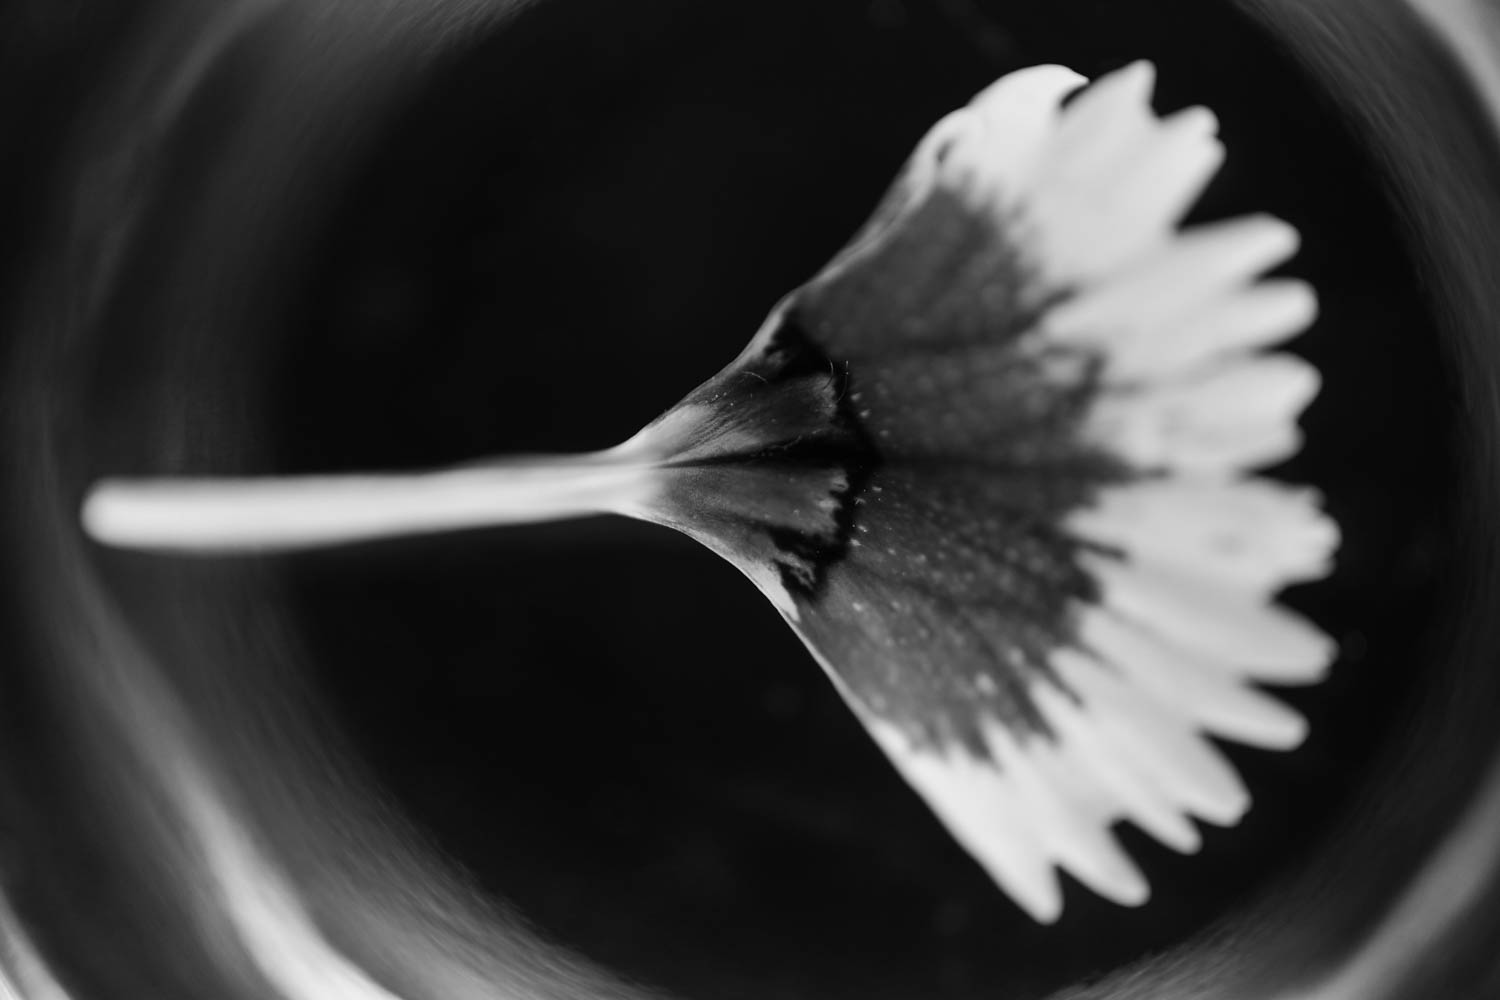 Dianthus flower petal black and white photograph.